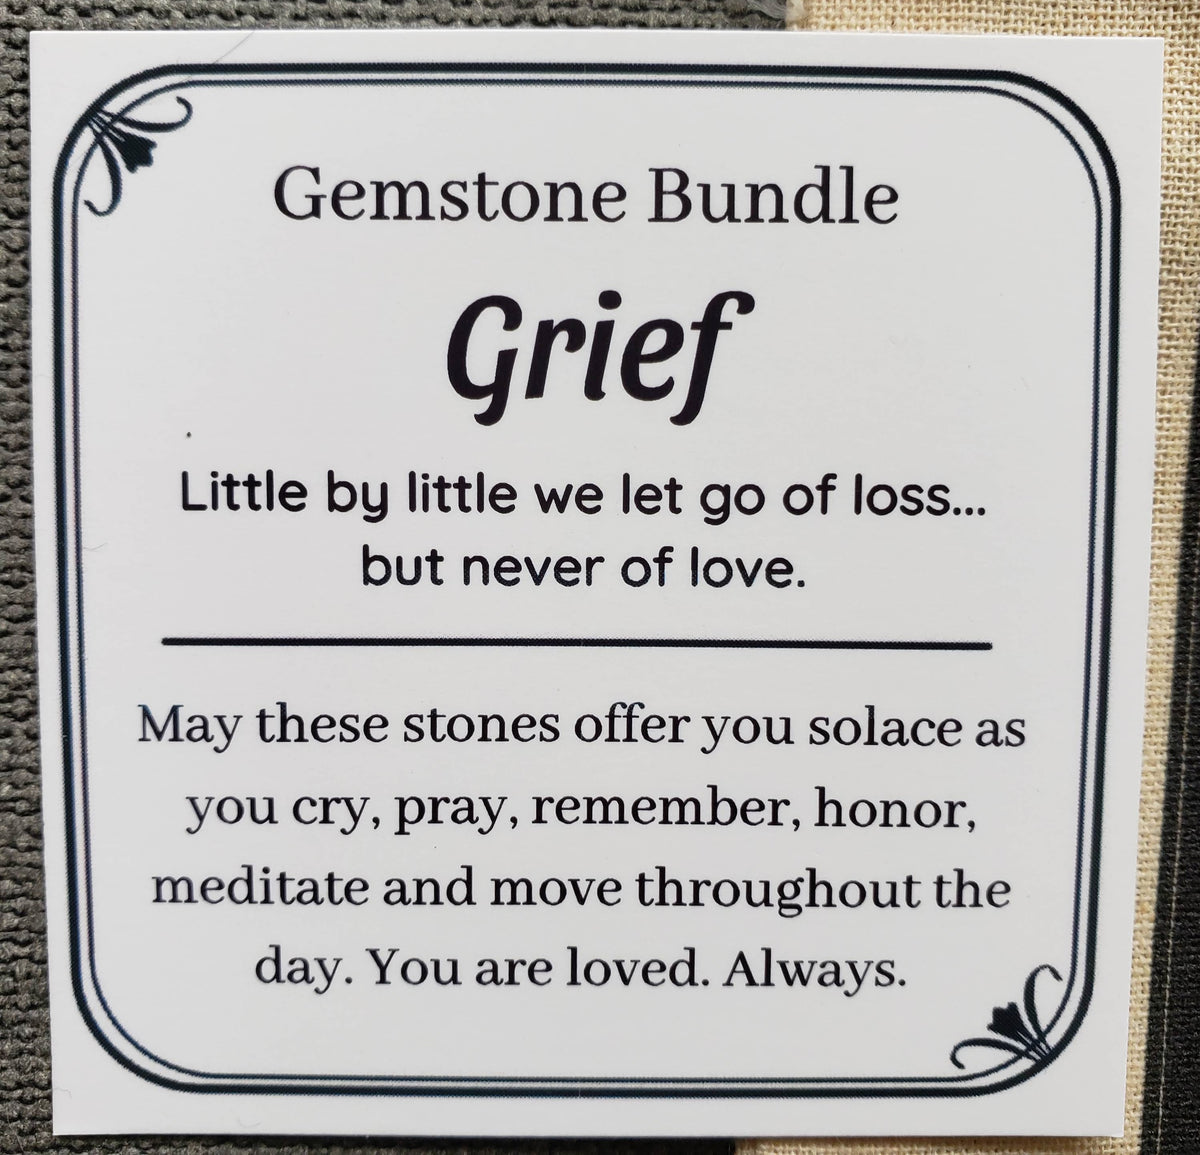 Grief Gemstone Bundle